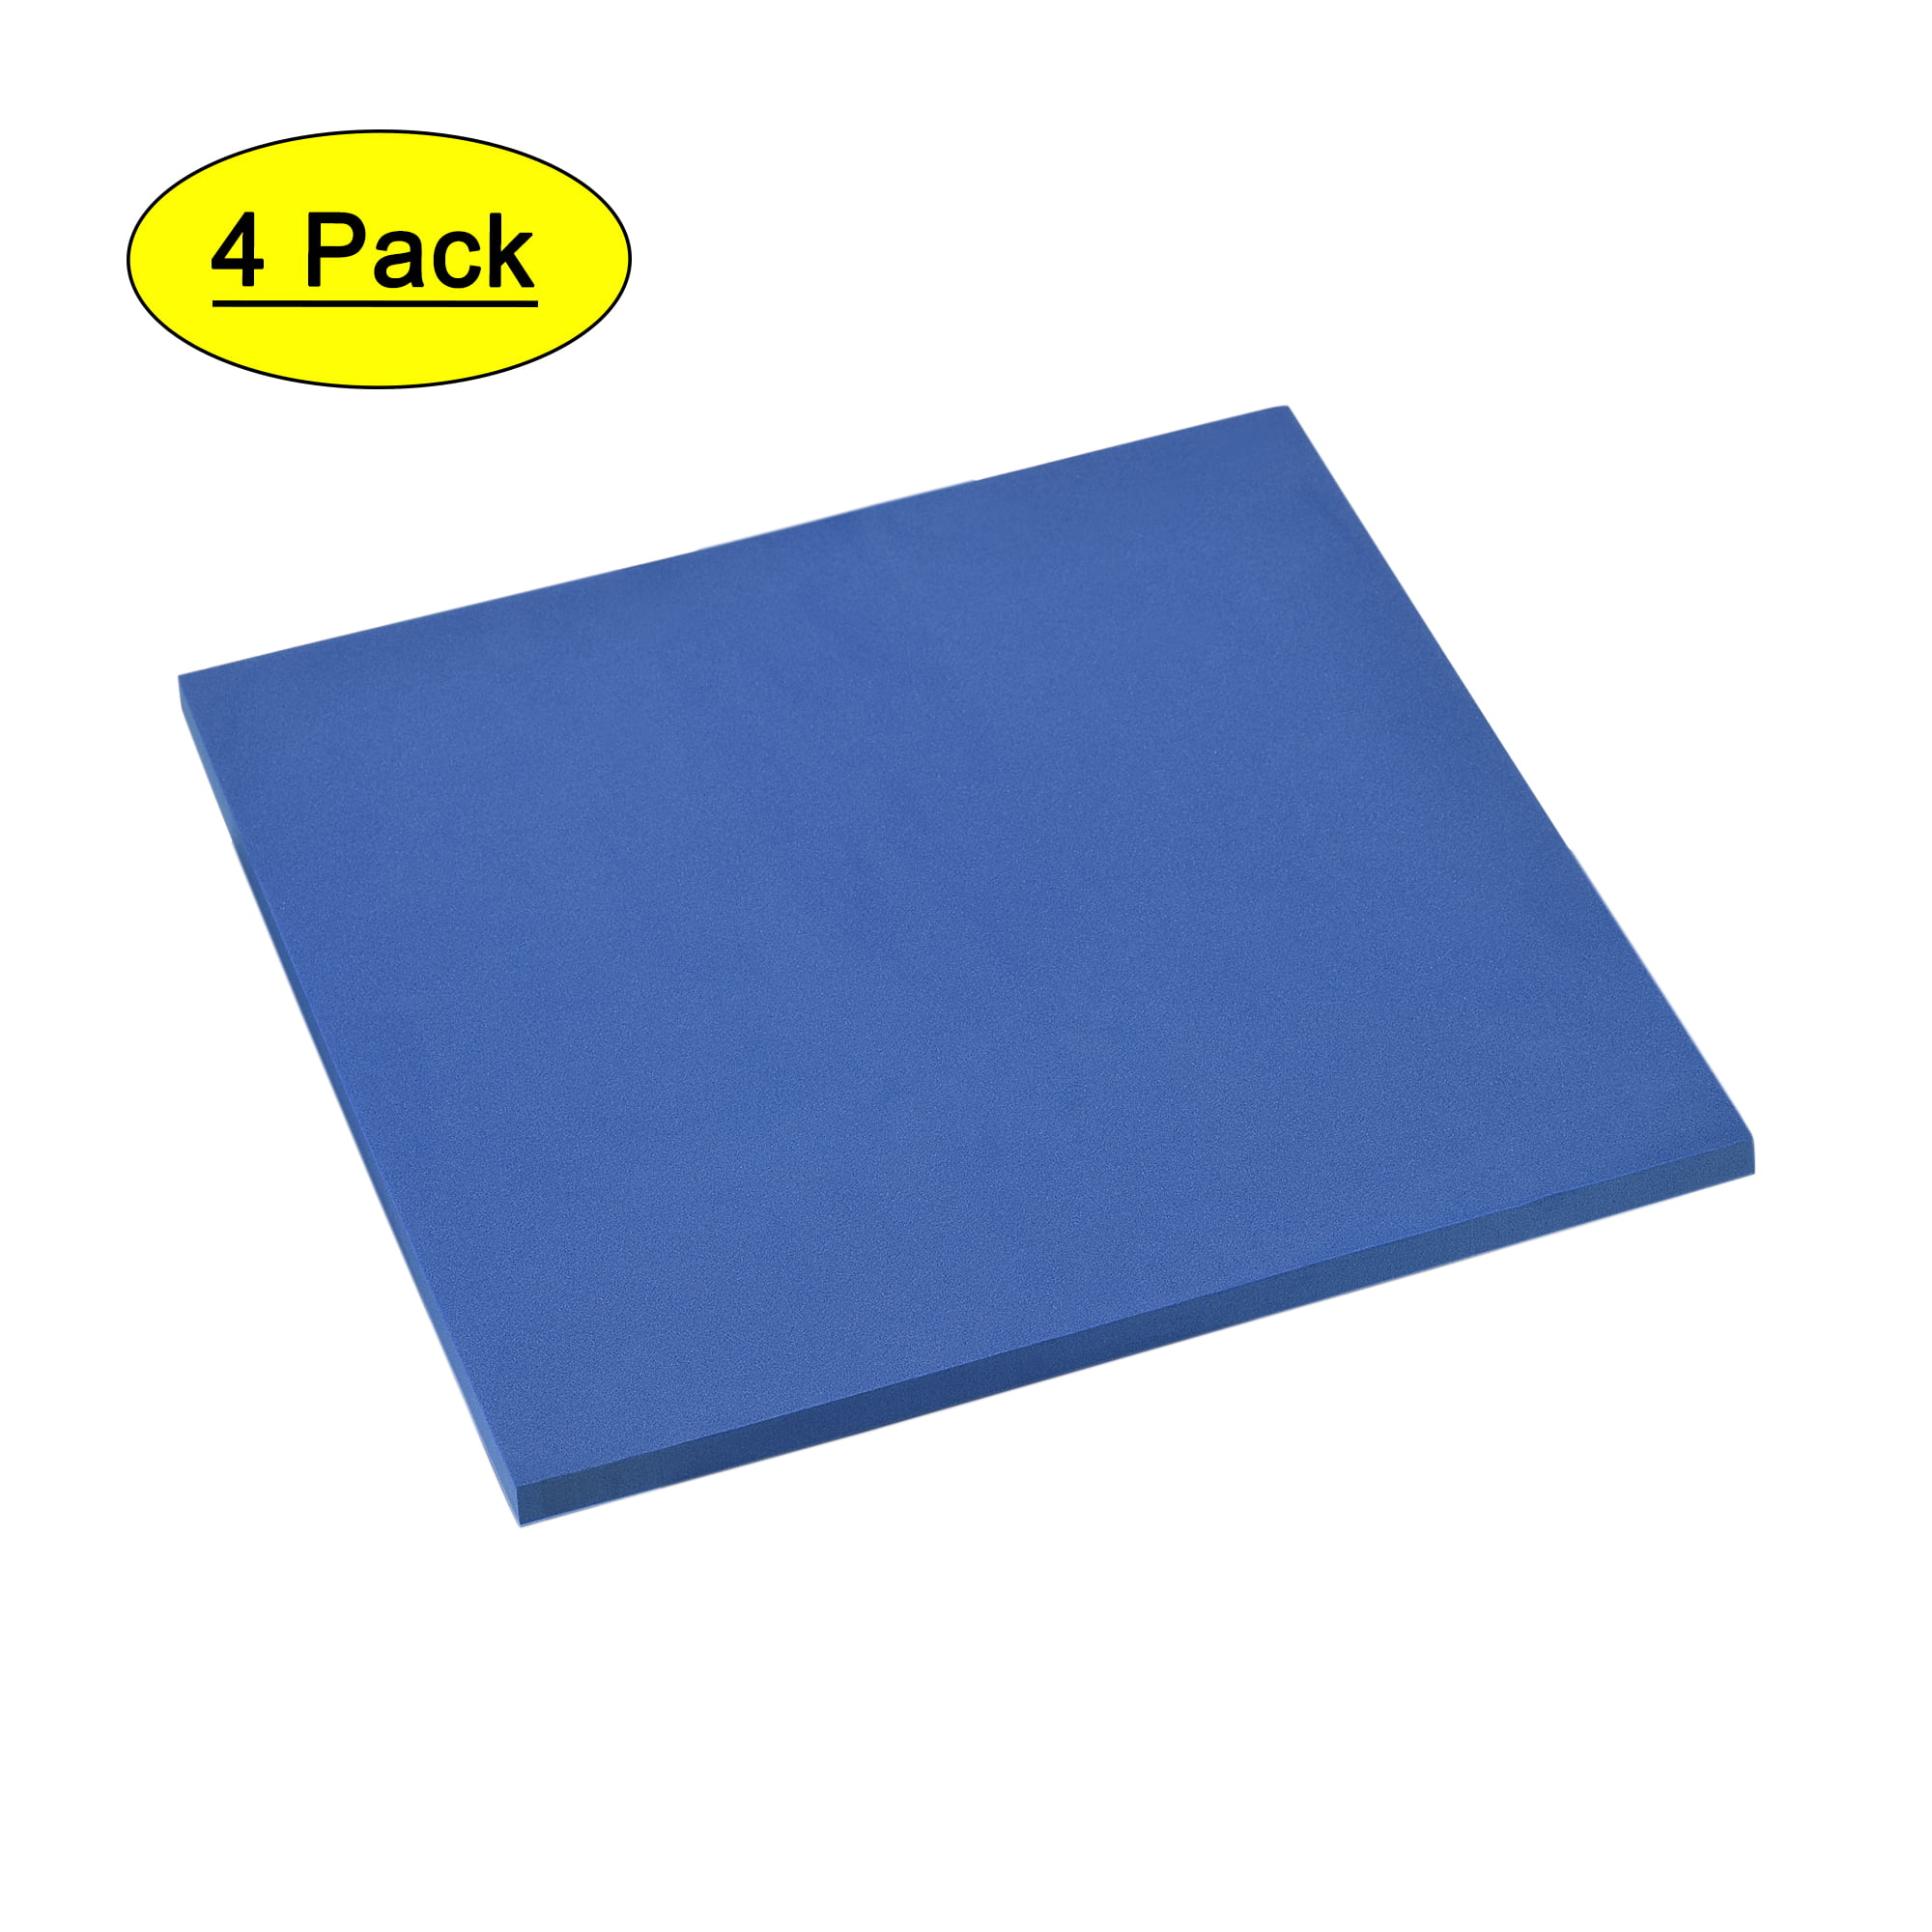 Diy Eva Foam sheet - How to make Foam sheet at home/Foam sheet making at  home/Diy Color faom paper 